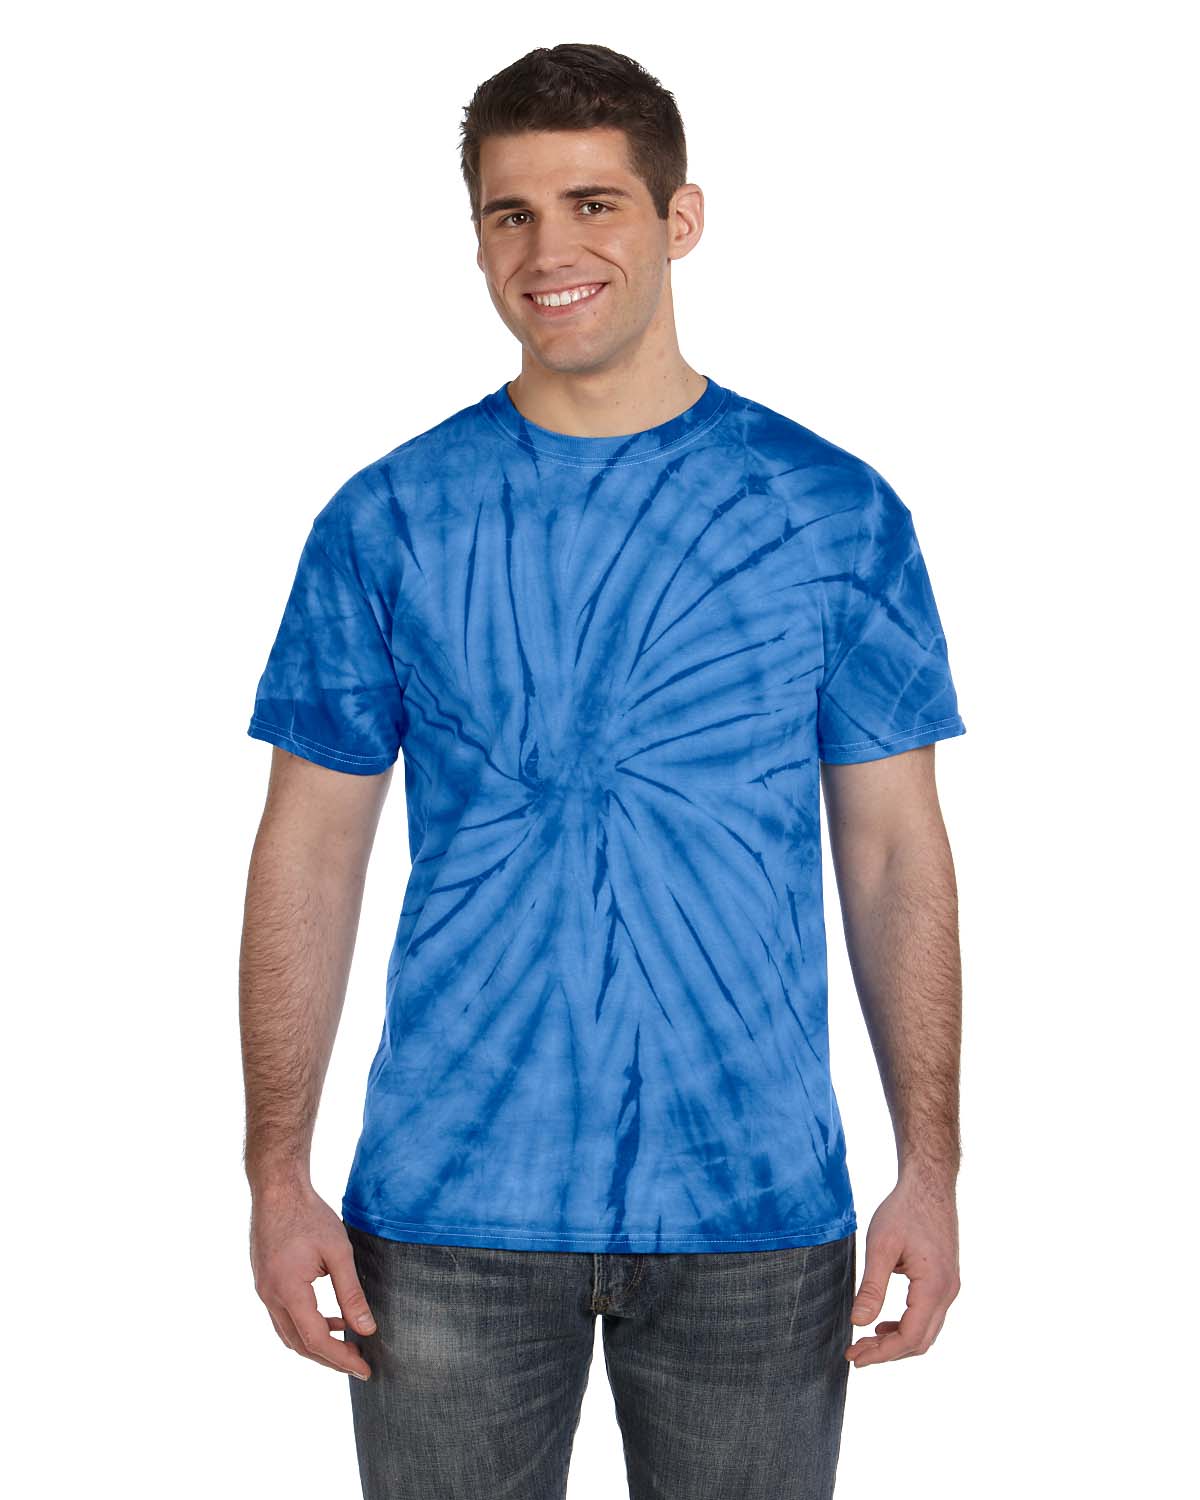 Unisex Tie-Dye T-Shirt Adult or Child